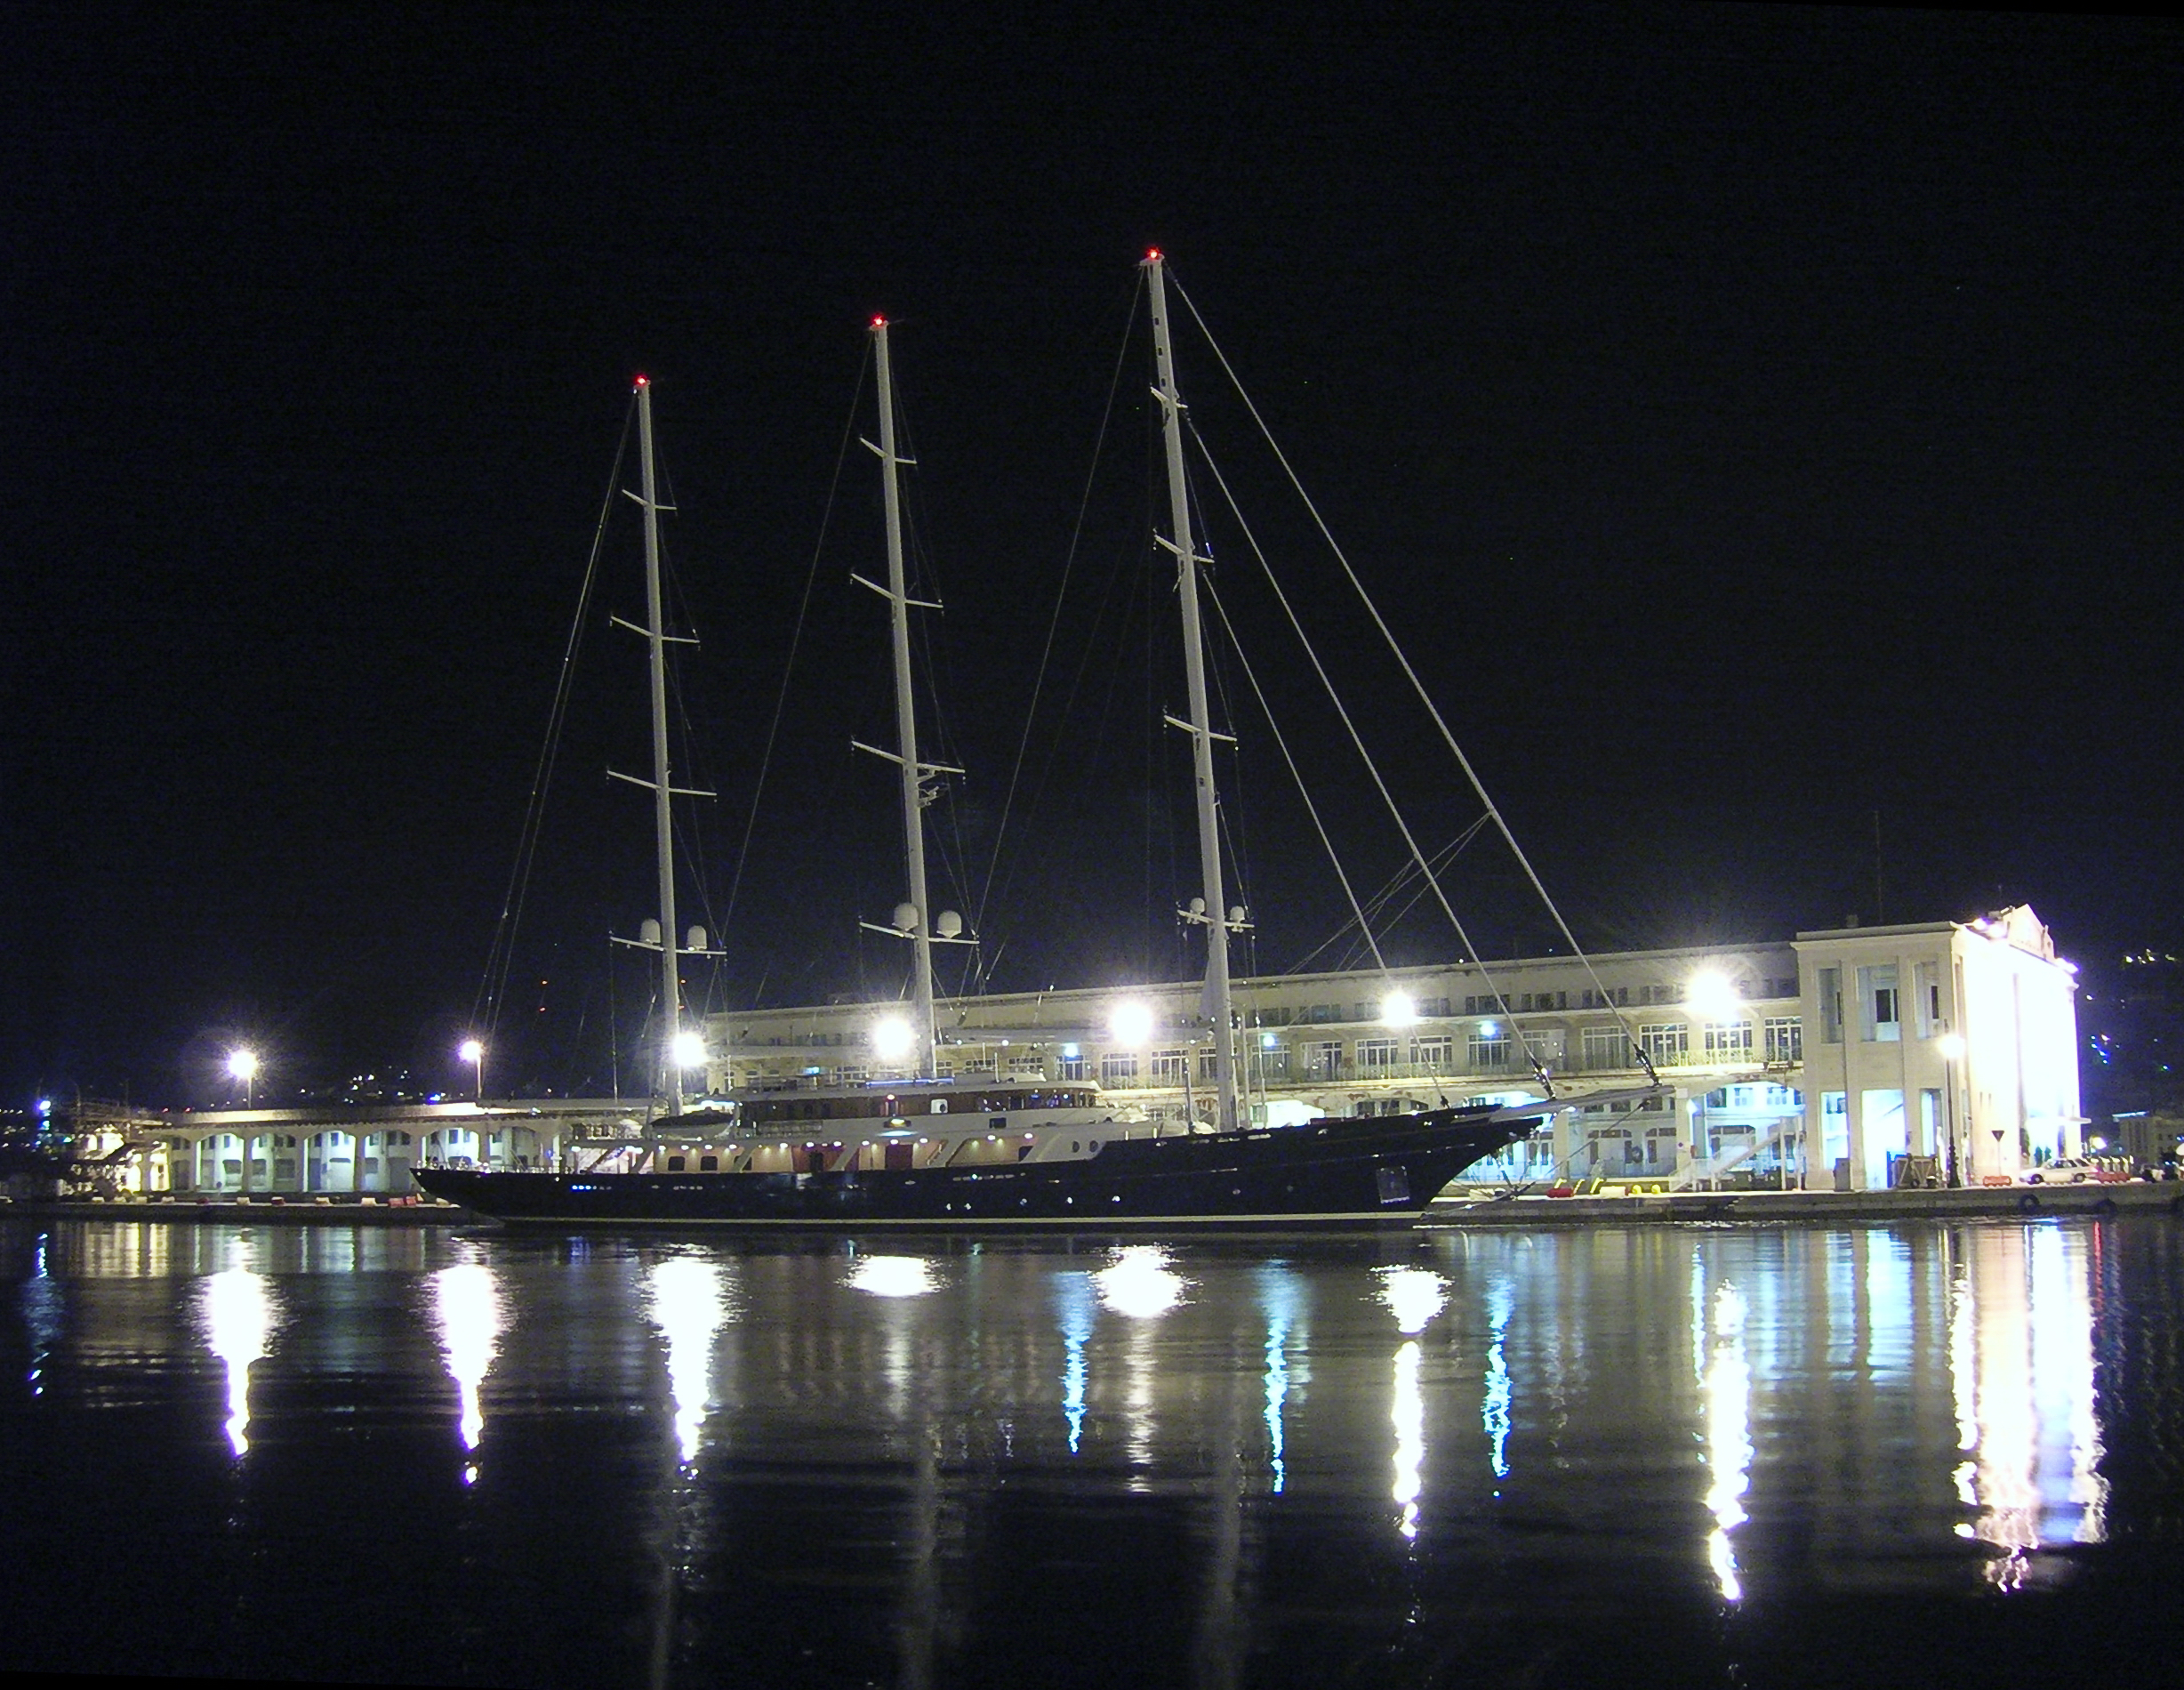 Ship at night, Boat, Dark, Dusk, Harbor, HQ Photo